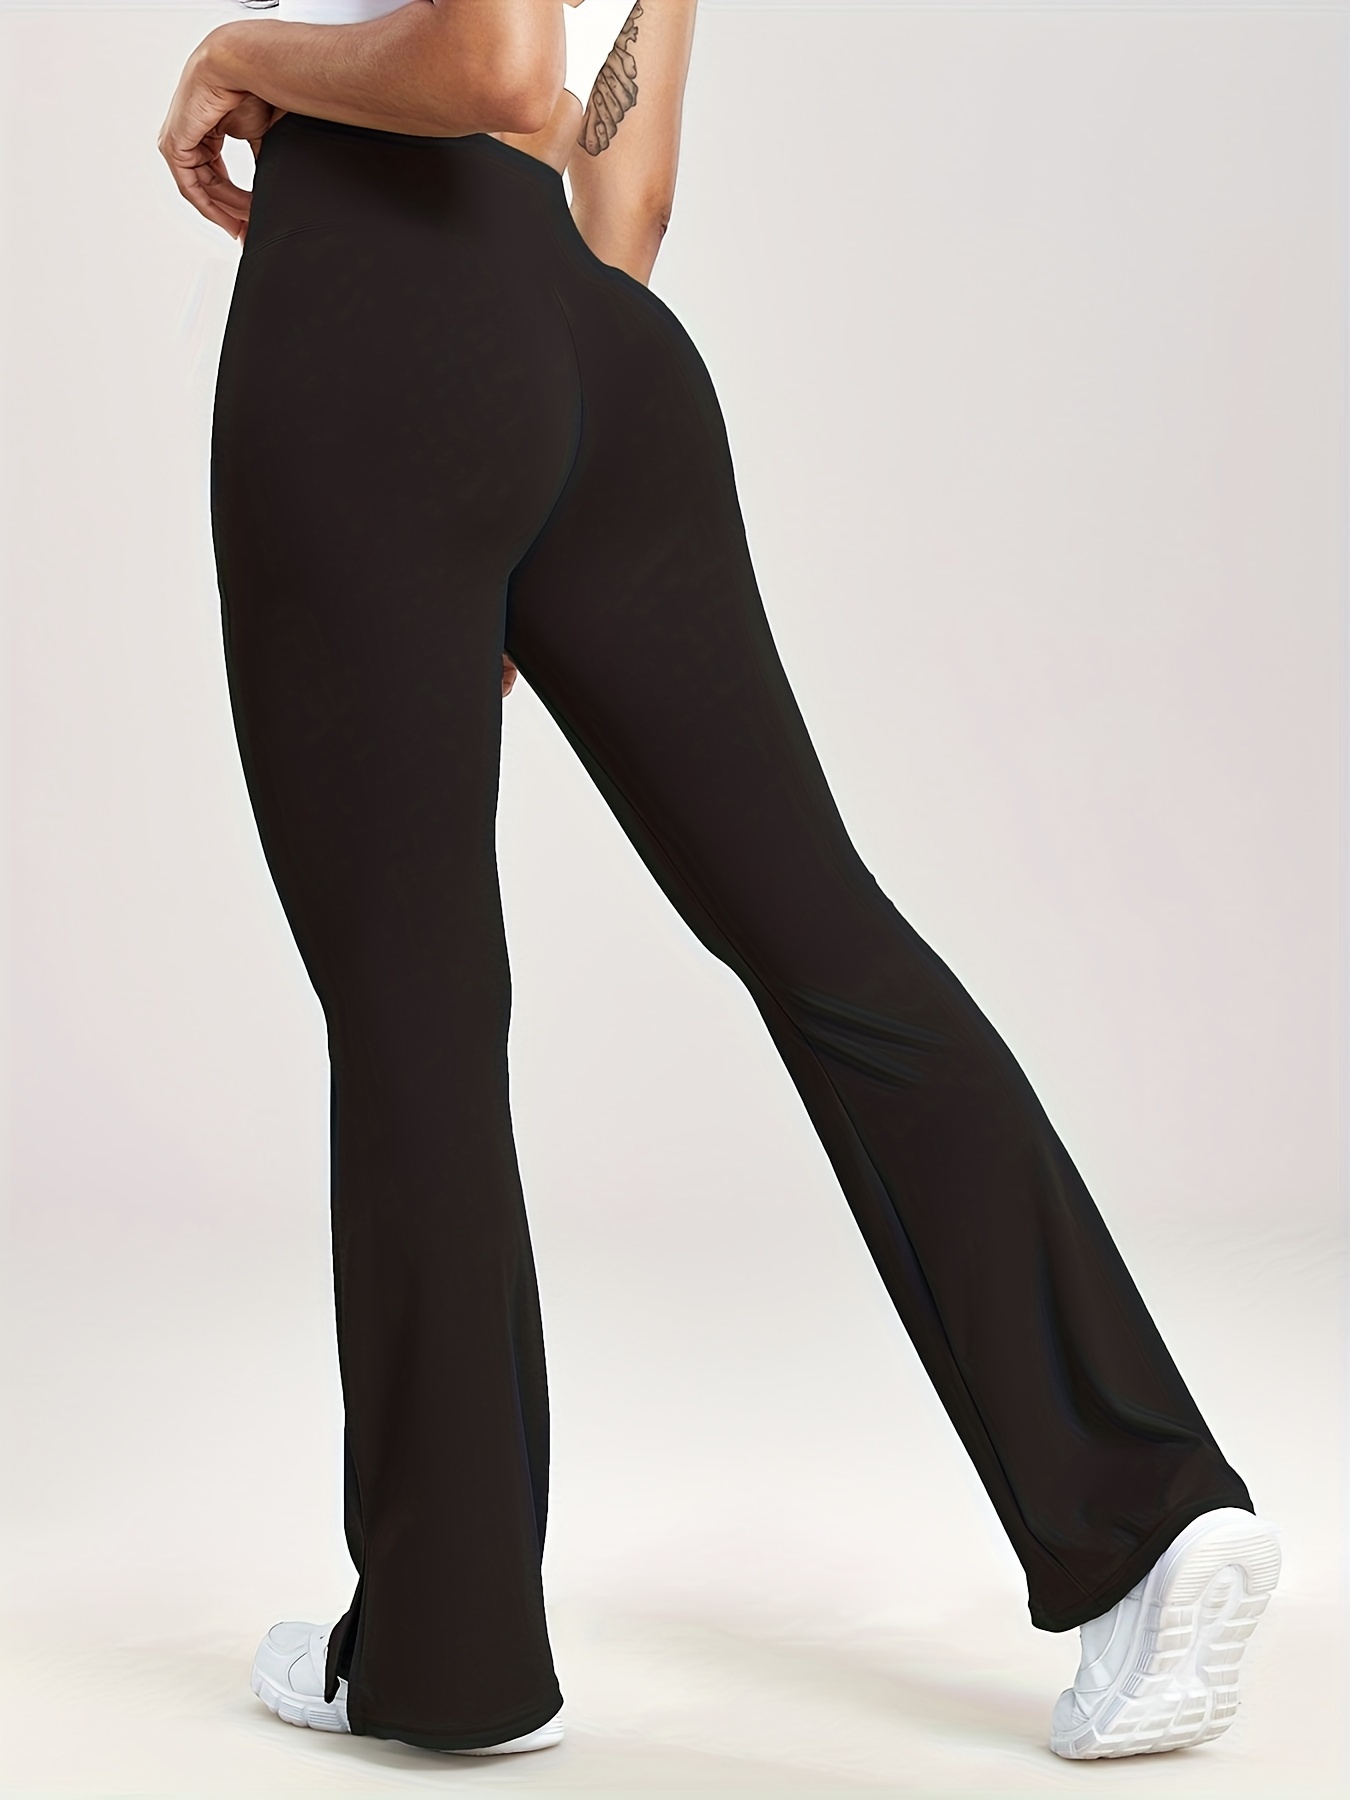 Bootcut Yoga Pants For Women Tummy Control Bootleg Leggings With